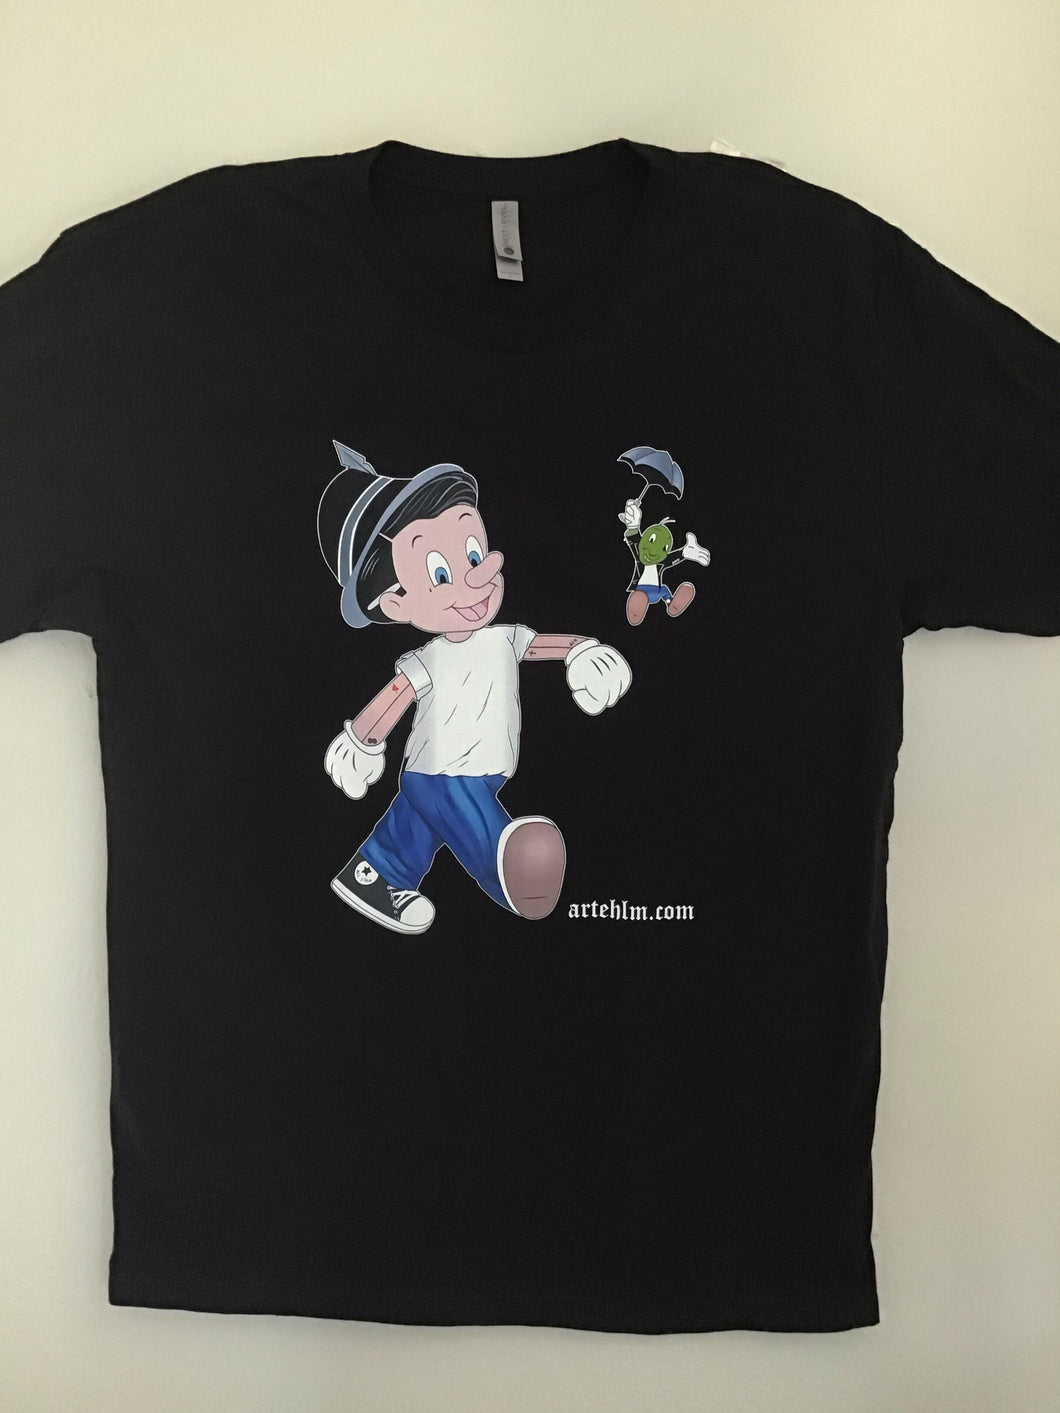 T-Shirt Men’s El Pinocchio shirt